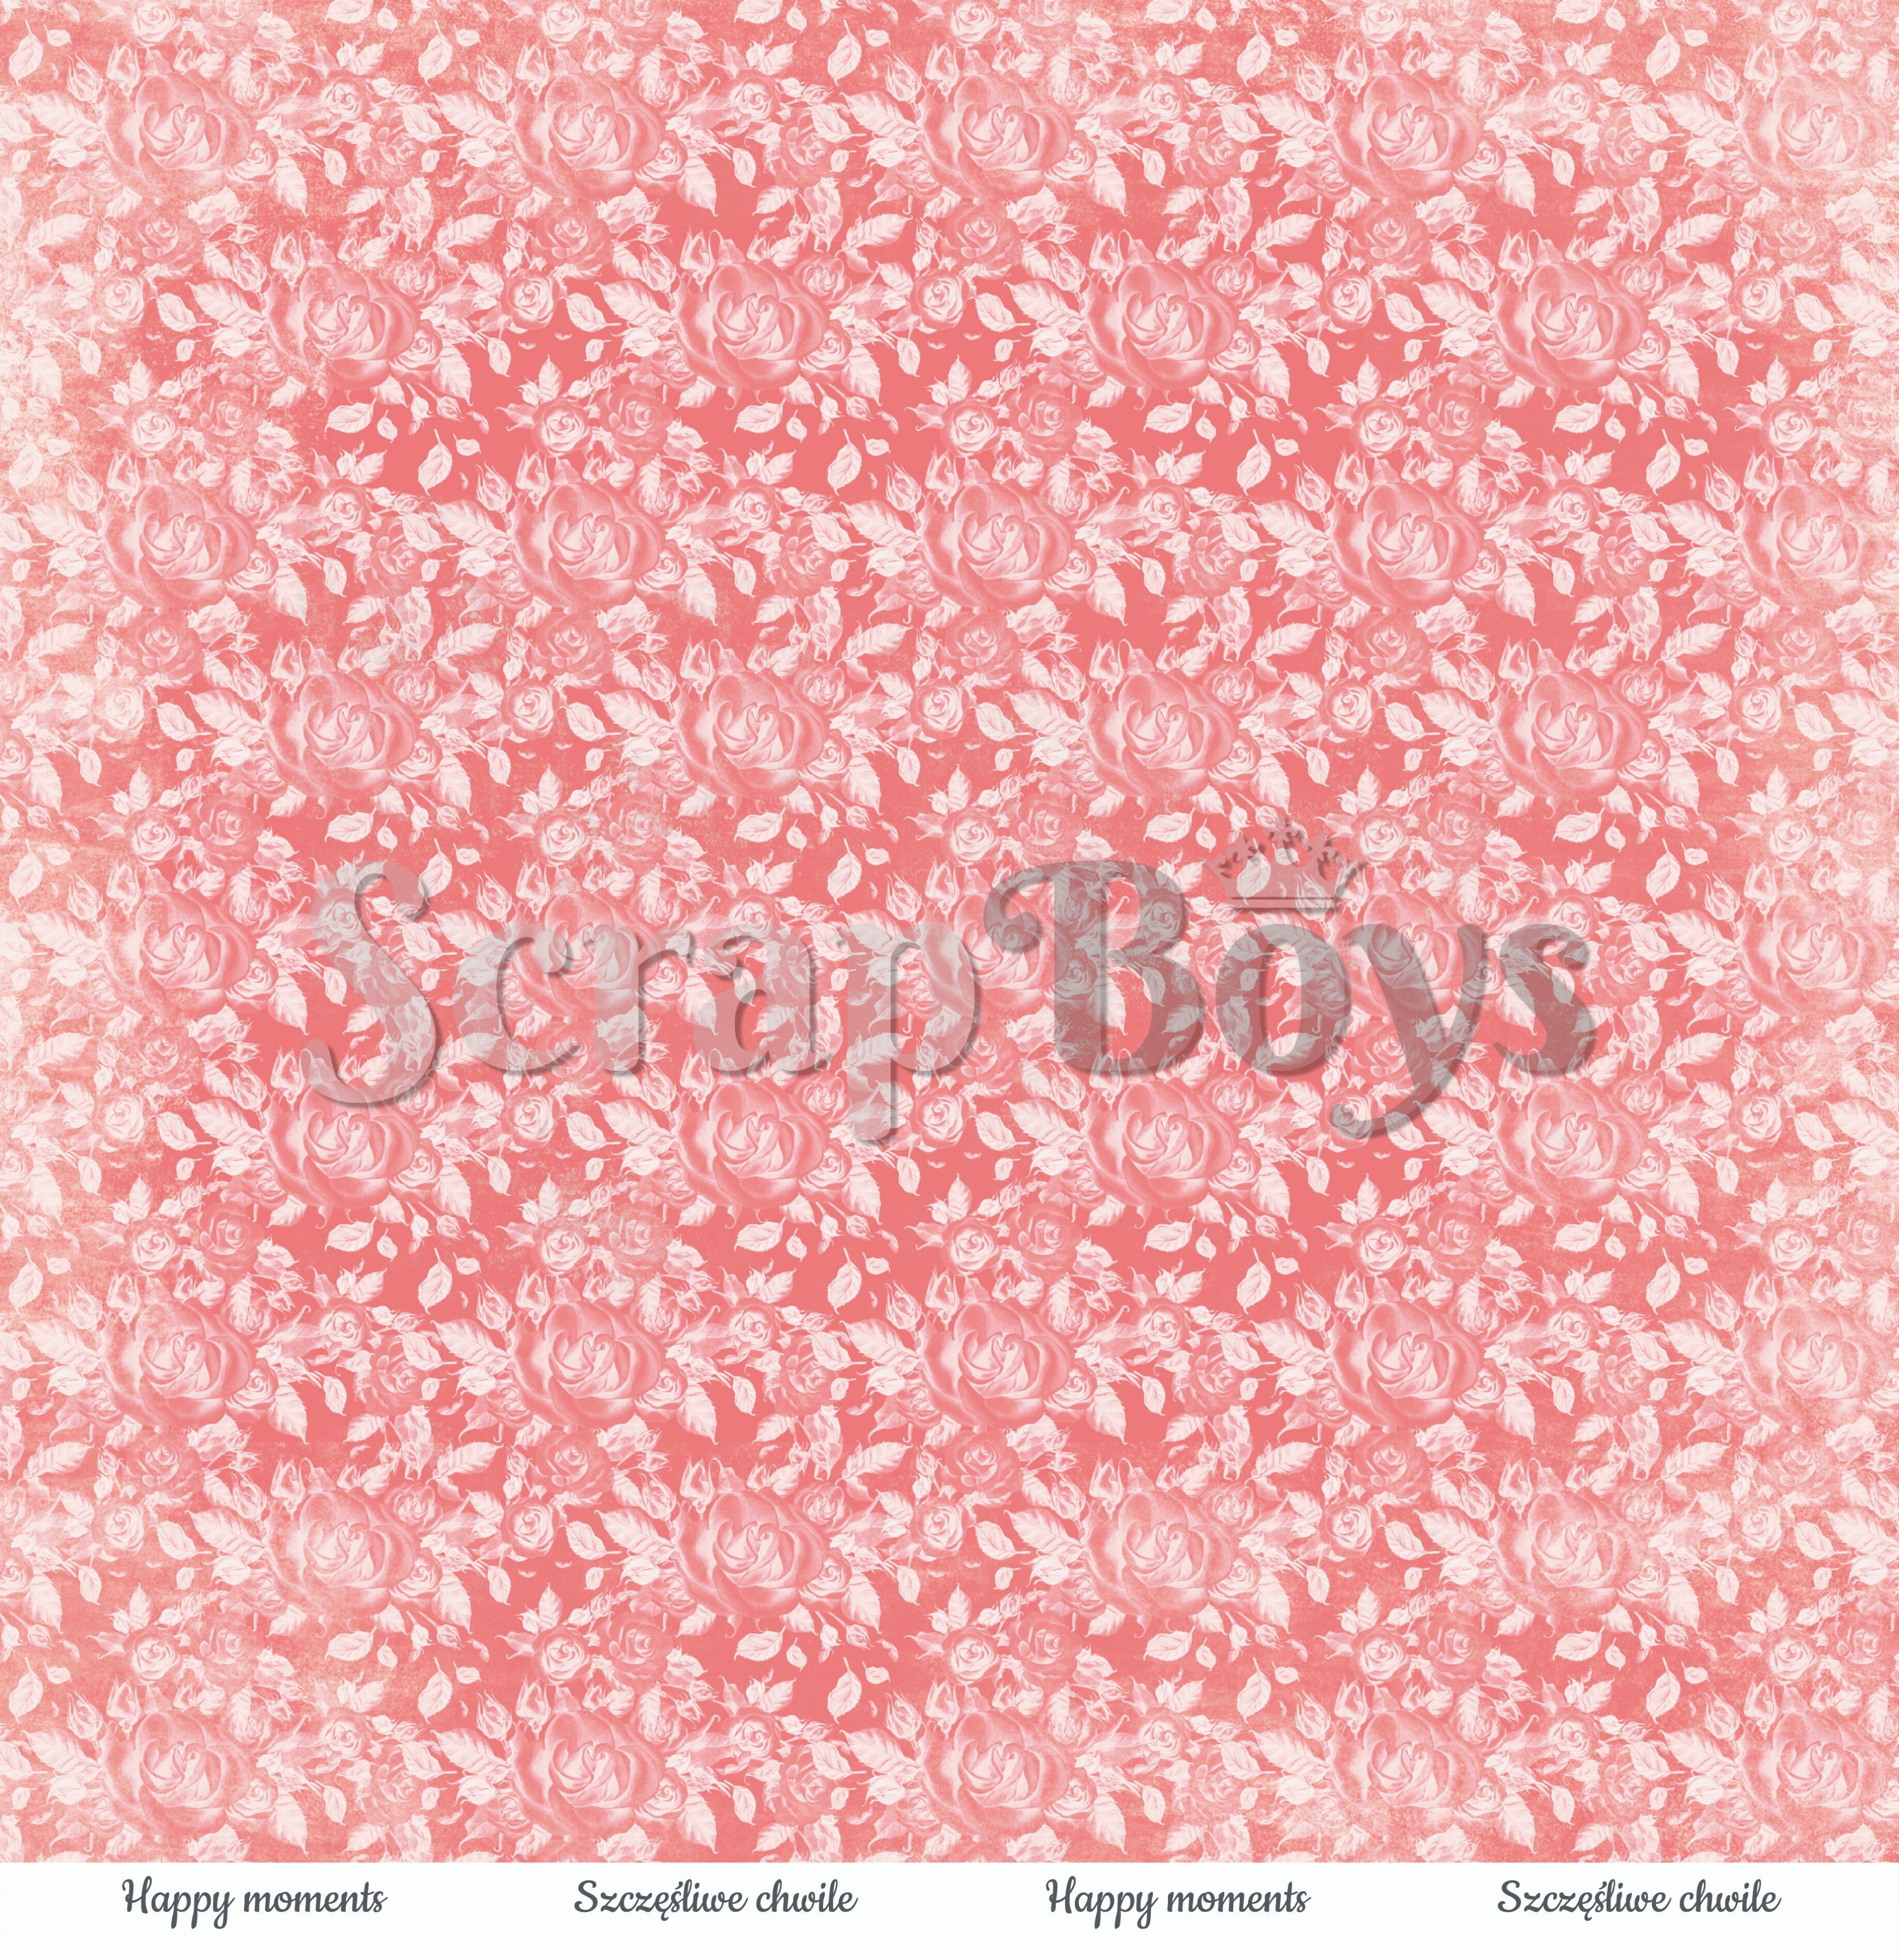 Scrapboys -  Butterfly Meadow - Paper Pad  -  12x12"